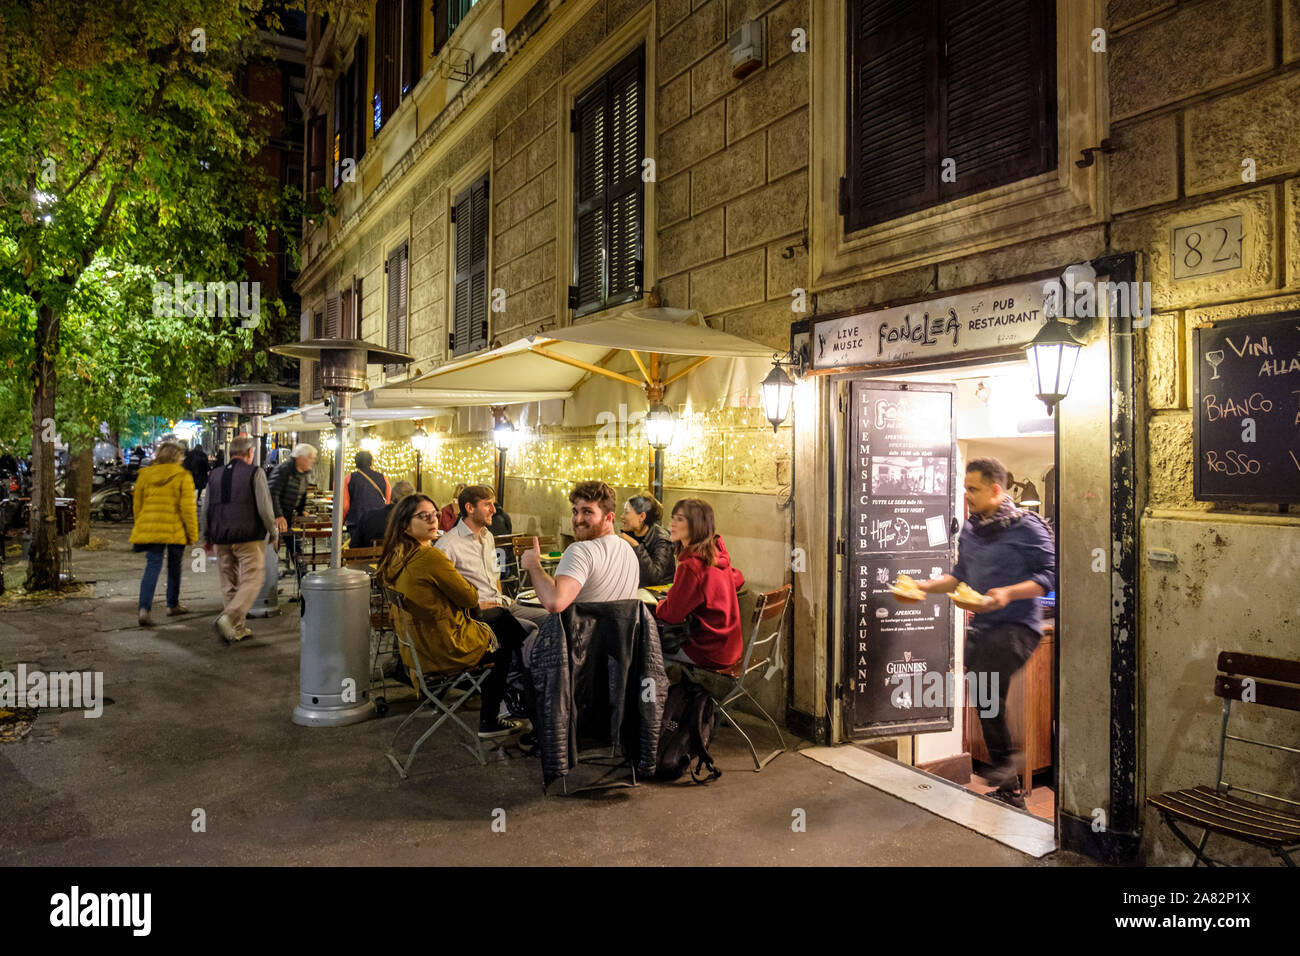 Alfresco dining, customers sitting on the sidewalk outside Fonclea Srl Restaurant, traditional pub with live music, Prati neighbourhood, Rome, Italy Stock Photo